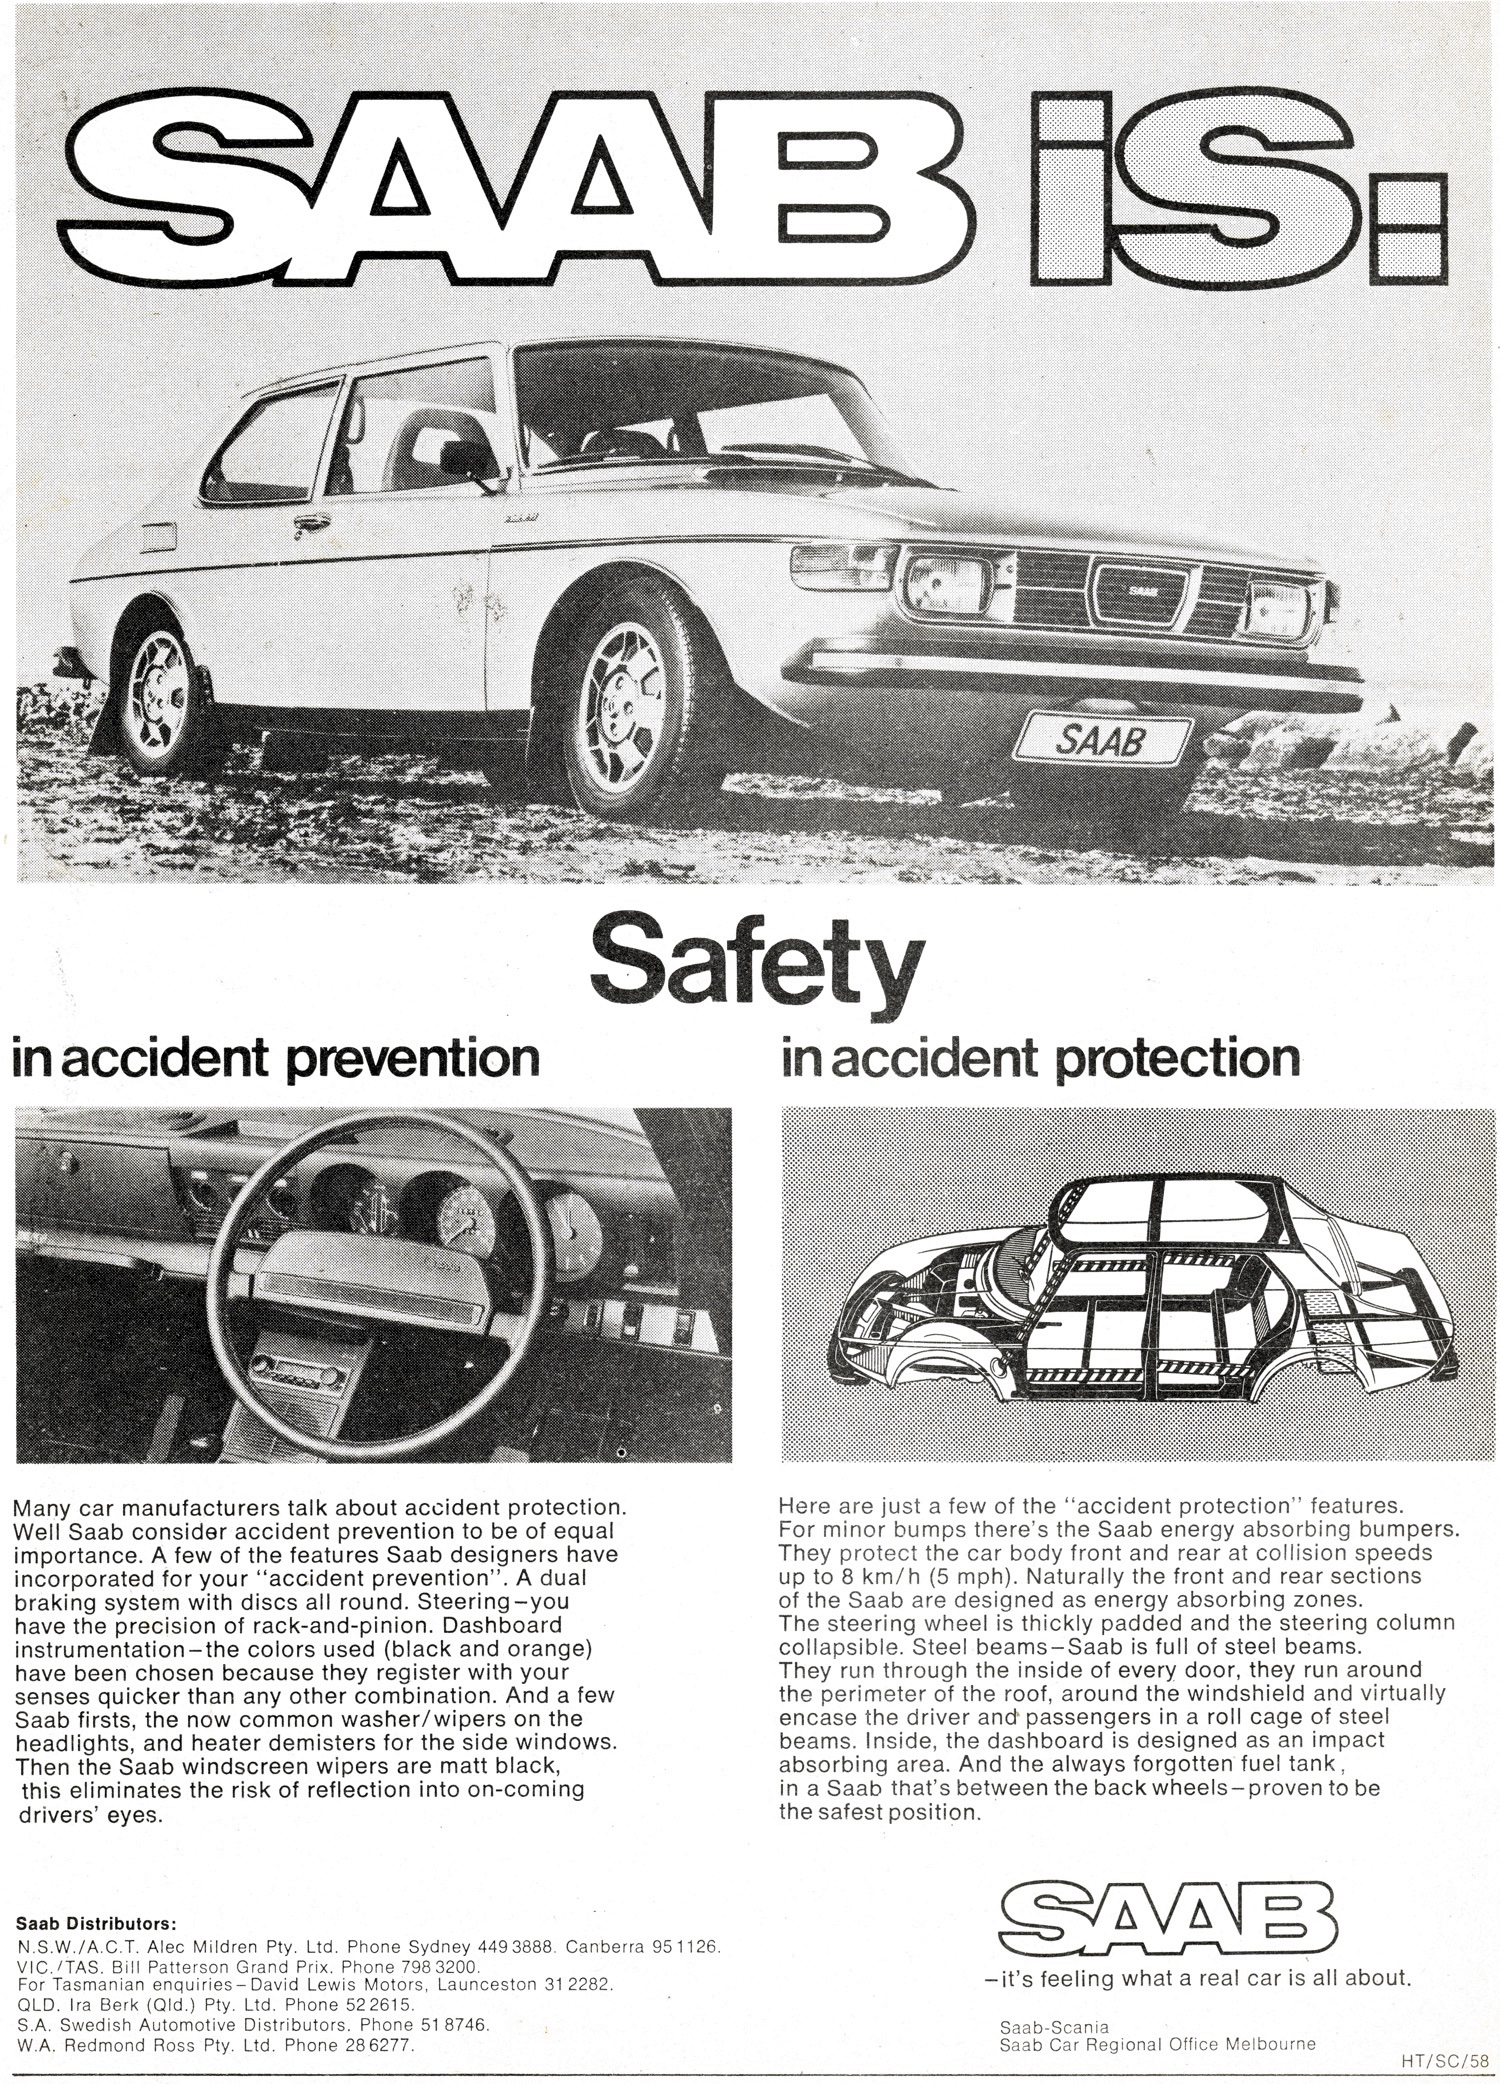 1975 SAAB Is Safety